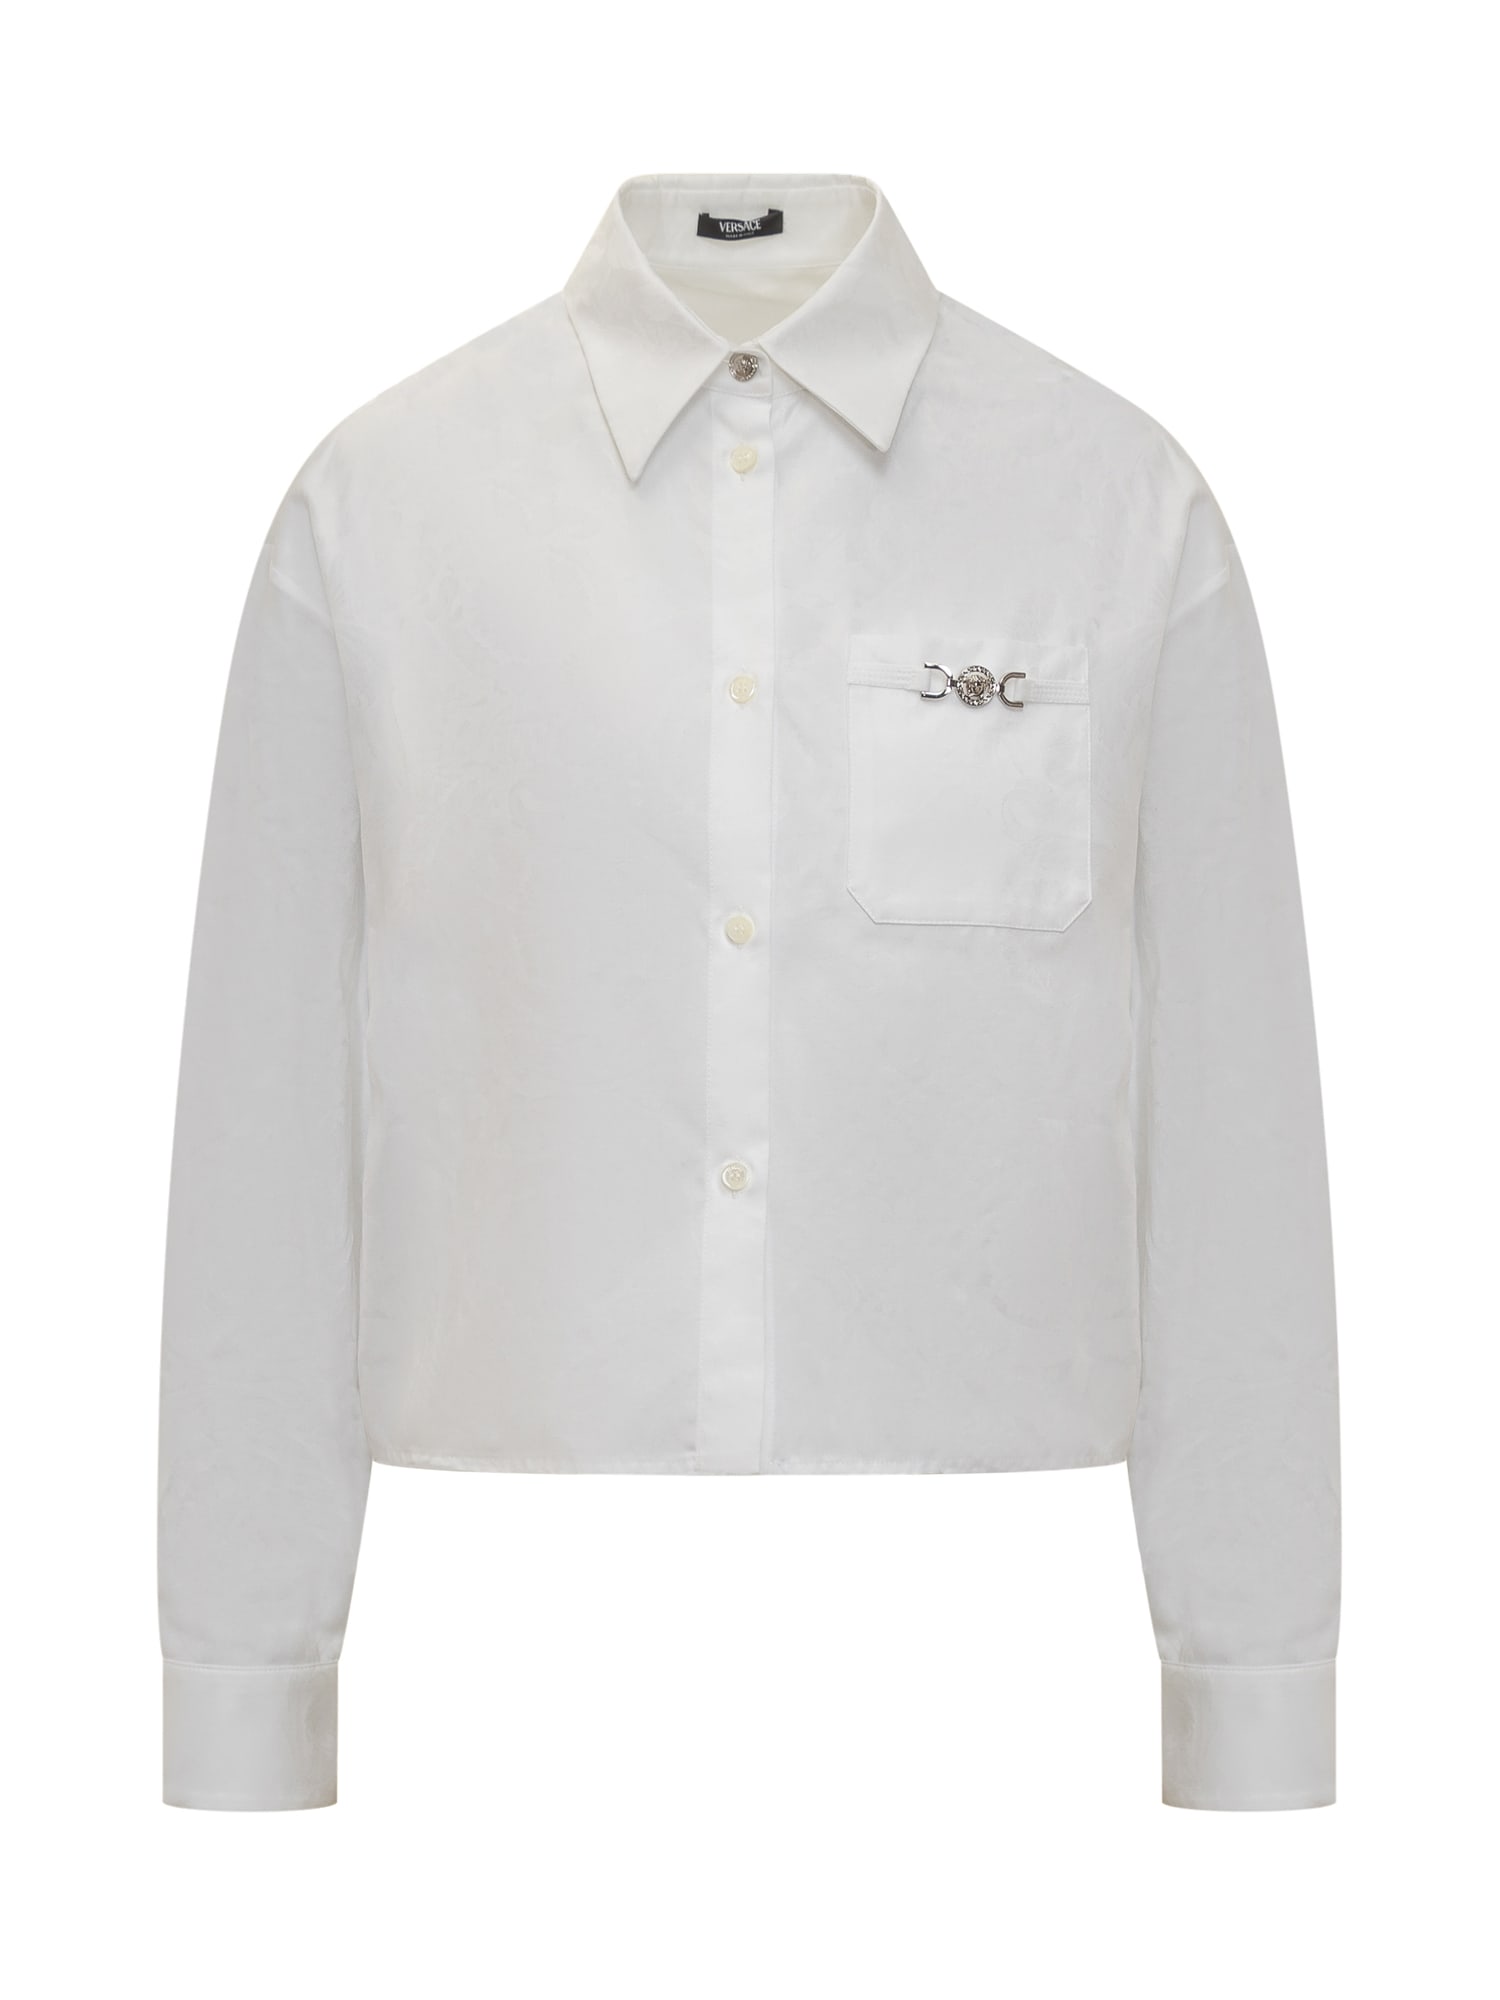 Shop Versace Informal Shirt In Bianco Ottico